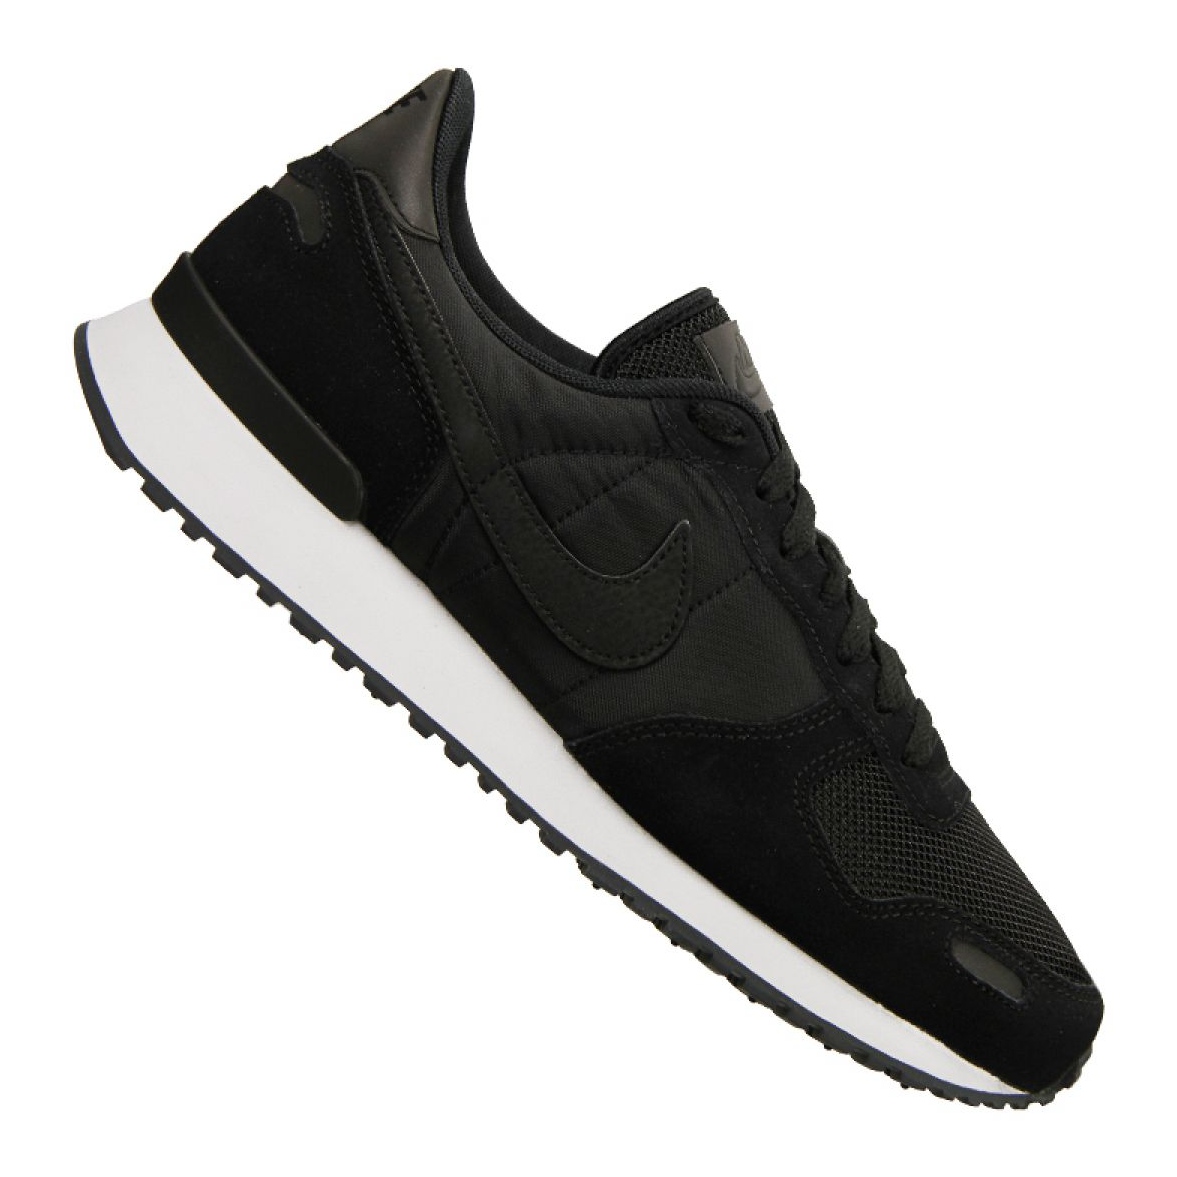 Nike Air Vortex M 903896-012 shoes black -